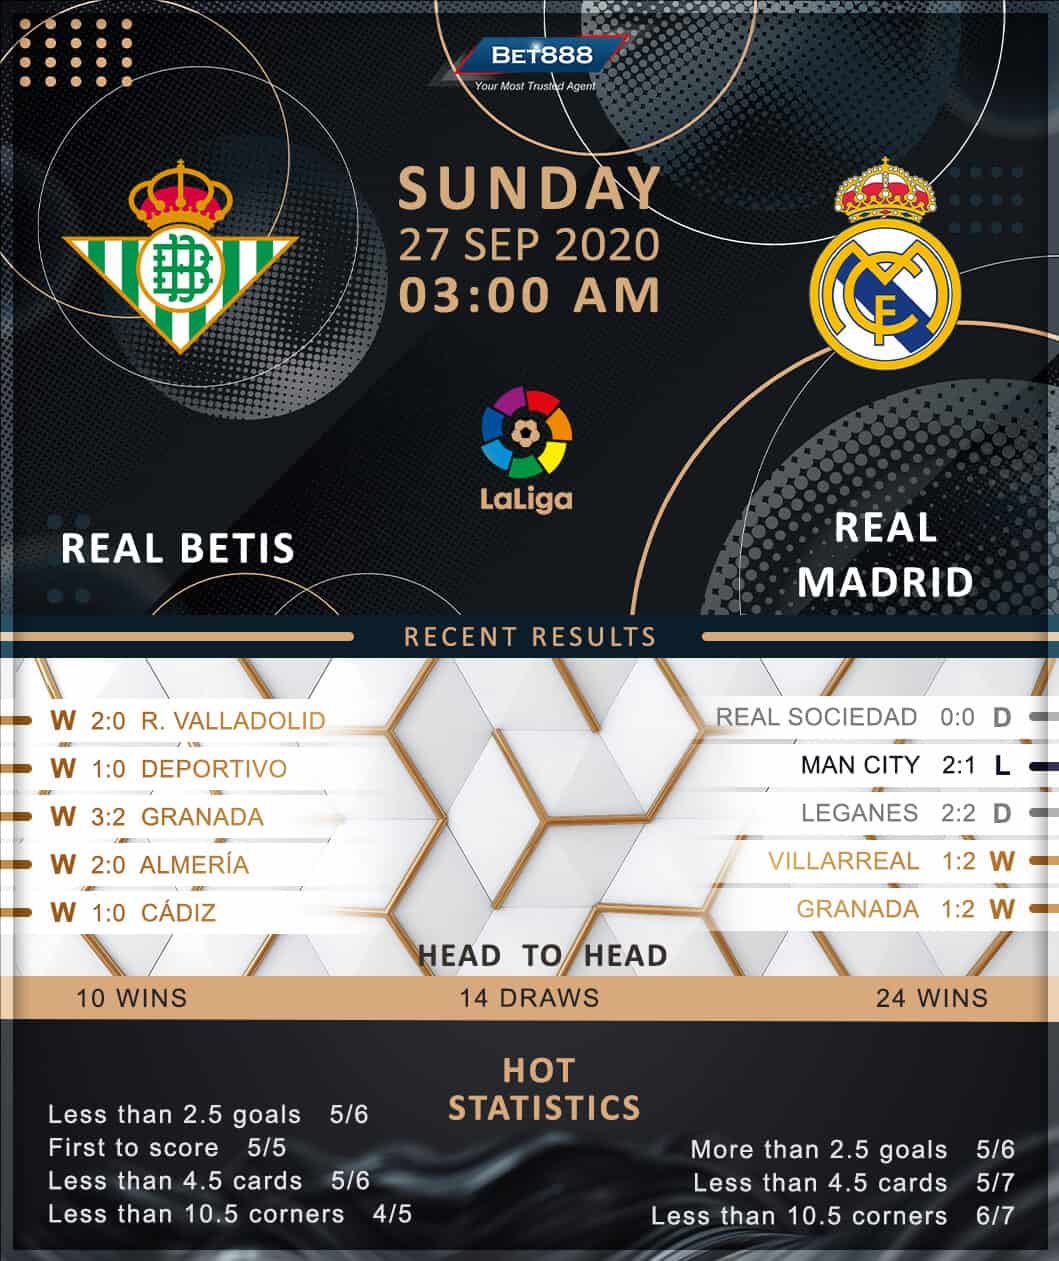 Real Betis vs Real Madrid 27/09/20